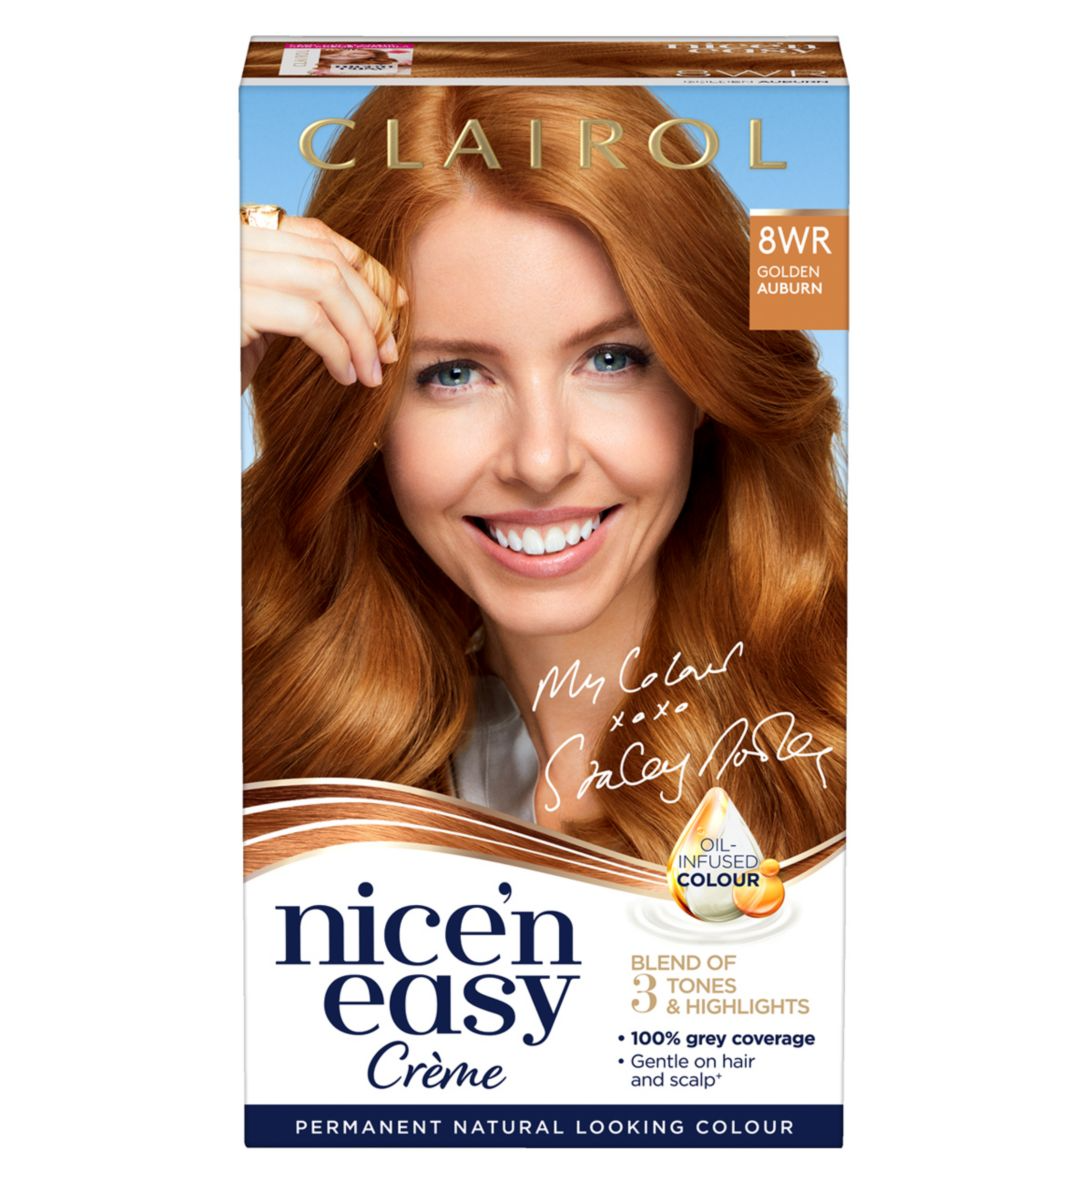 Clairol Nice'n Easy Crème Oil Infused Permanent Hair Dye 8WR Golden Auburn